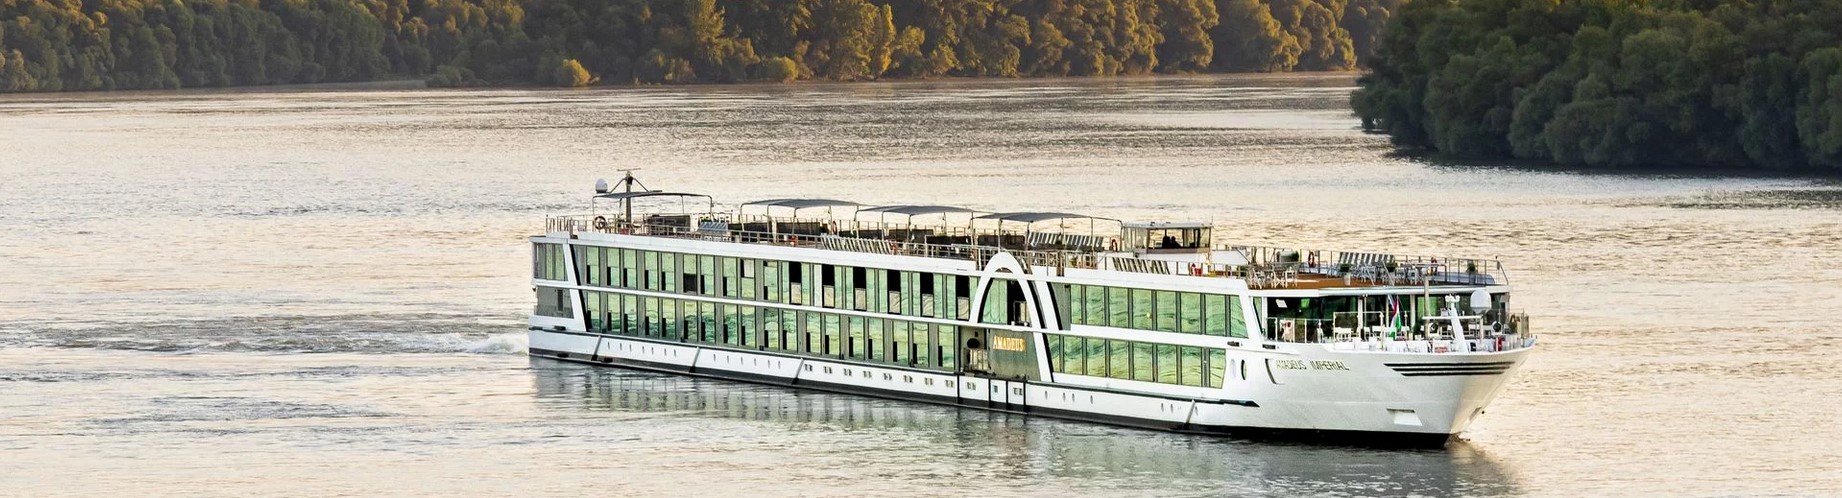 Amadeus Imperial River Cruise Ship